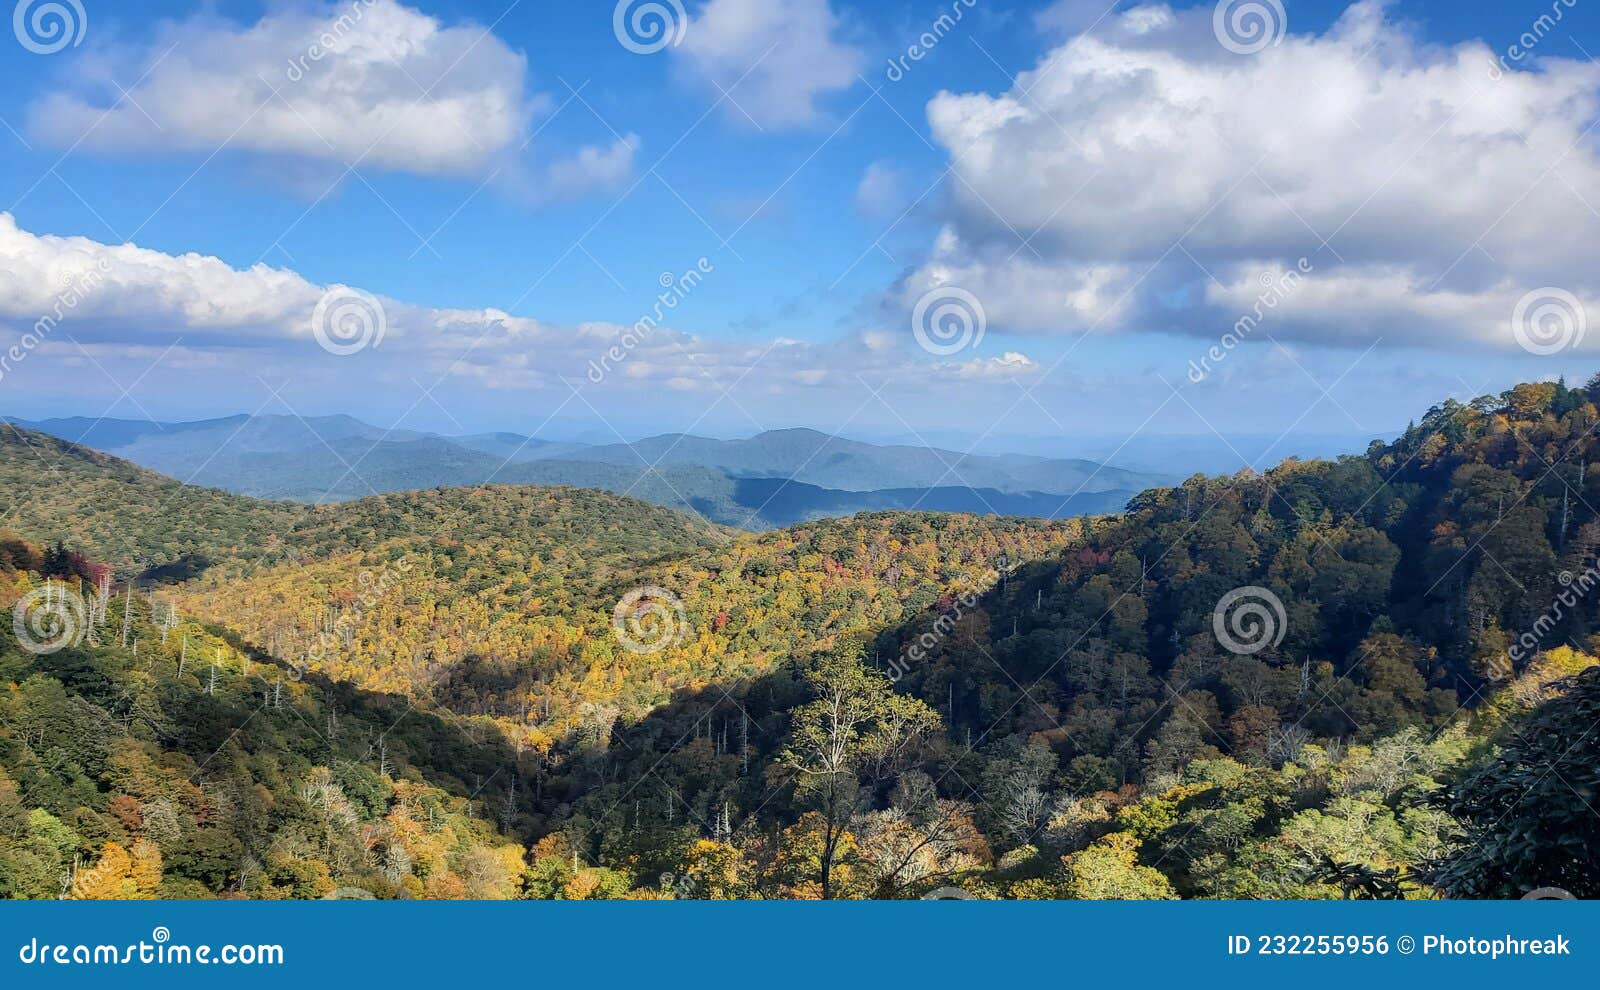 mountian in the appalachians in fall